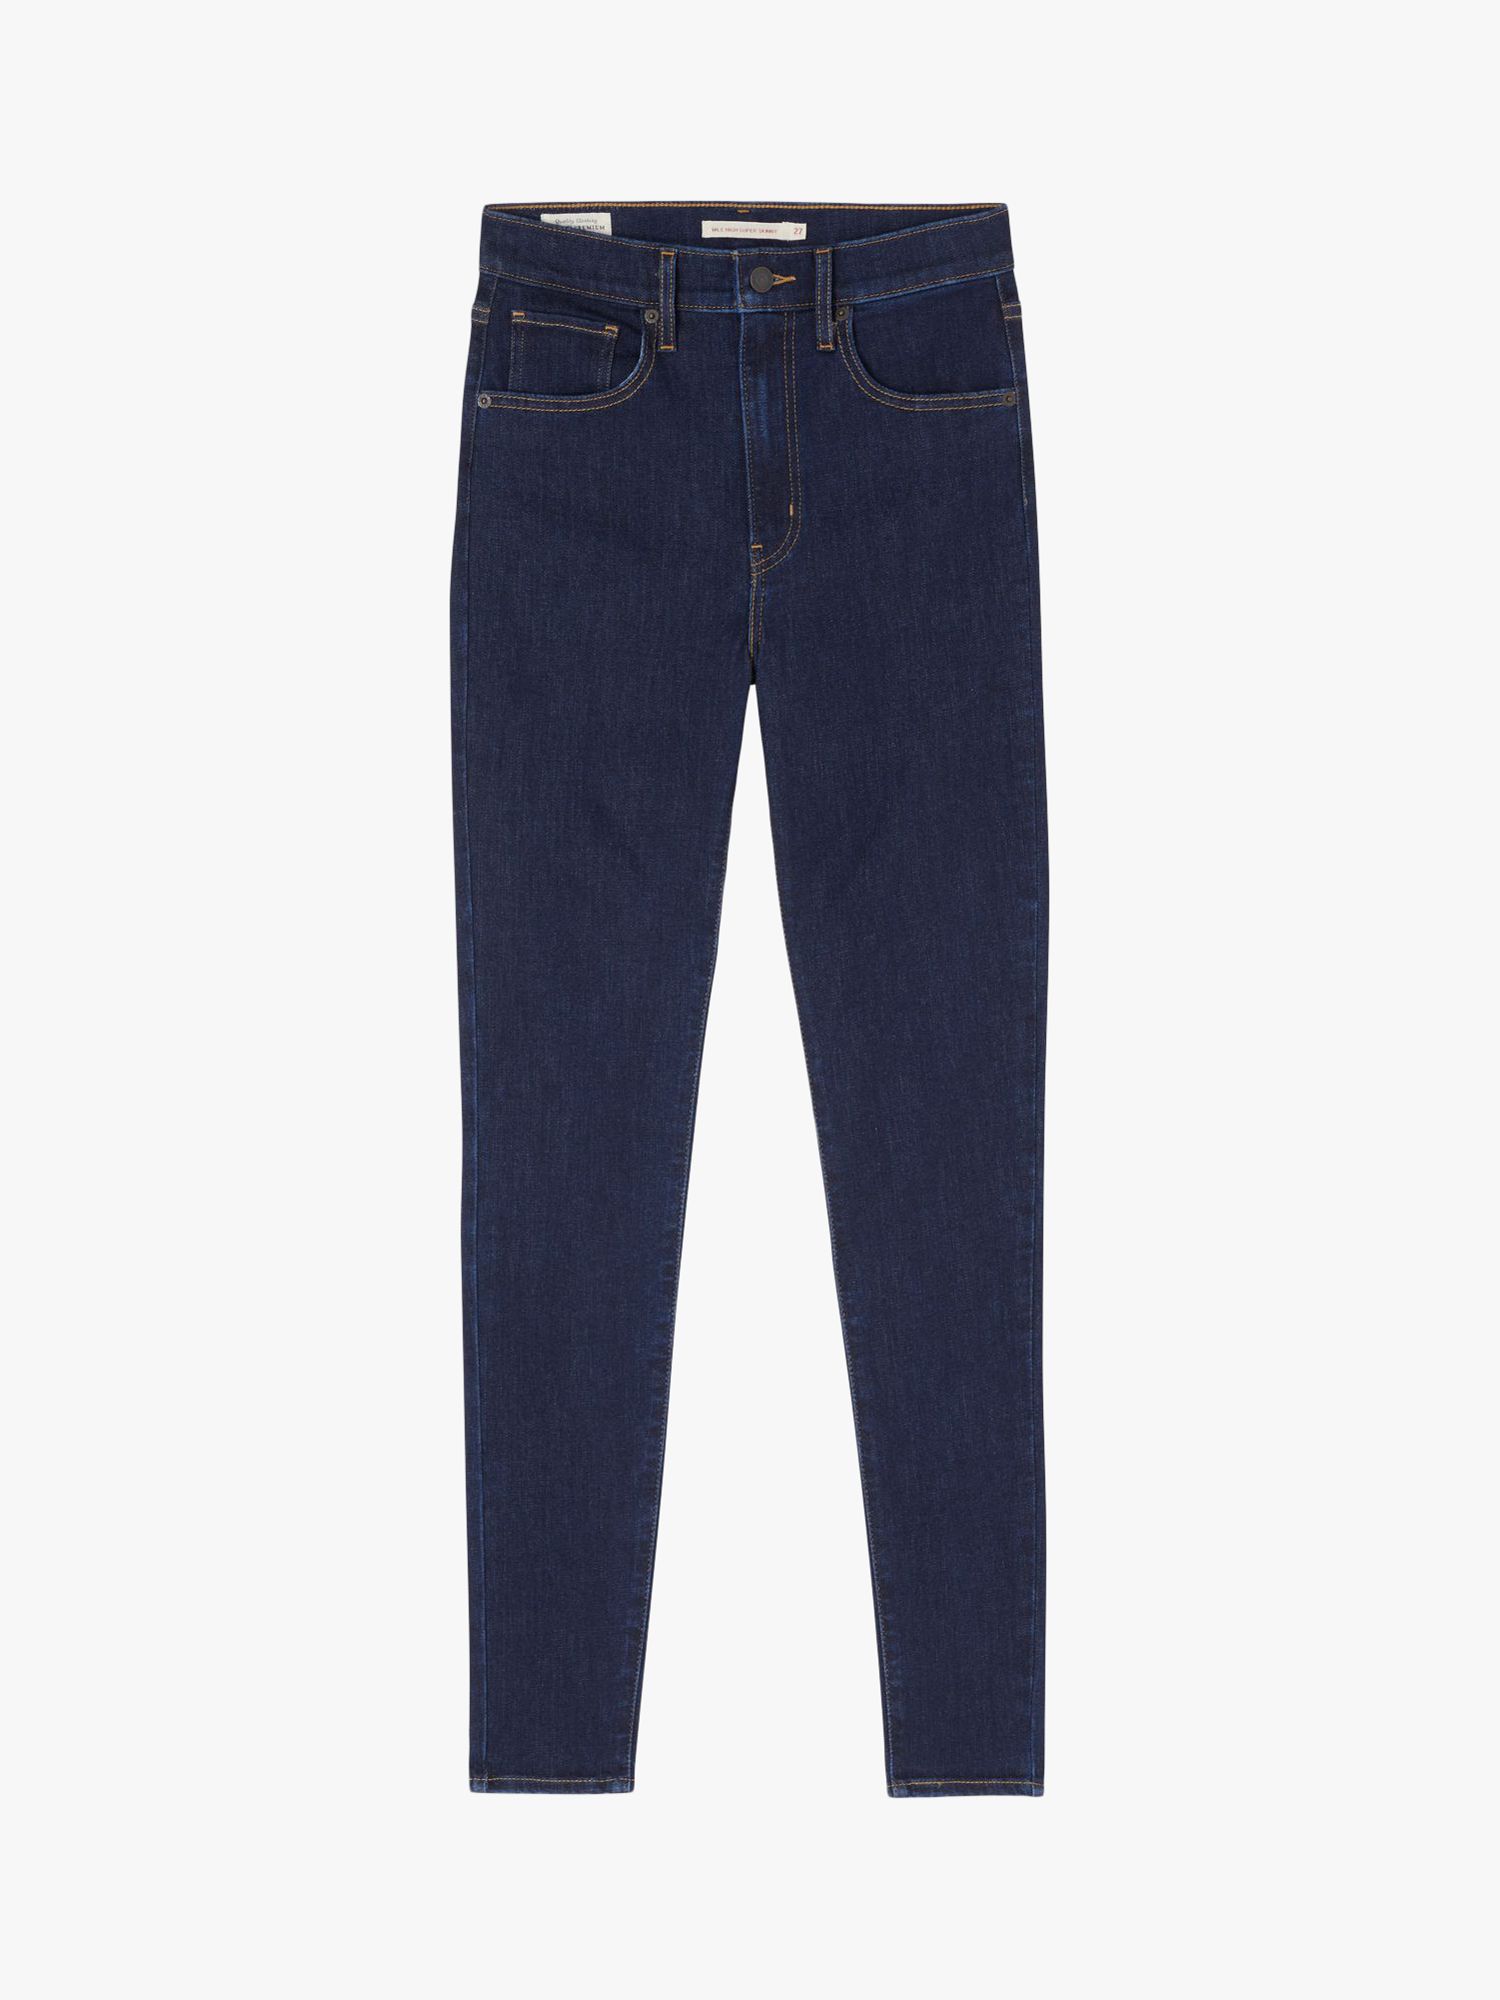 Levi's Mile High Super Skinny Jeans, Top Shelf, W24/L28